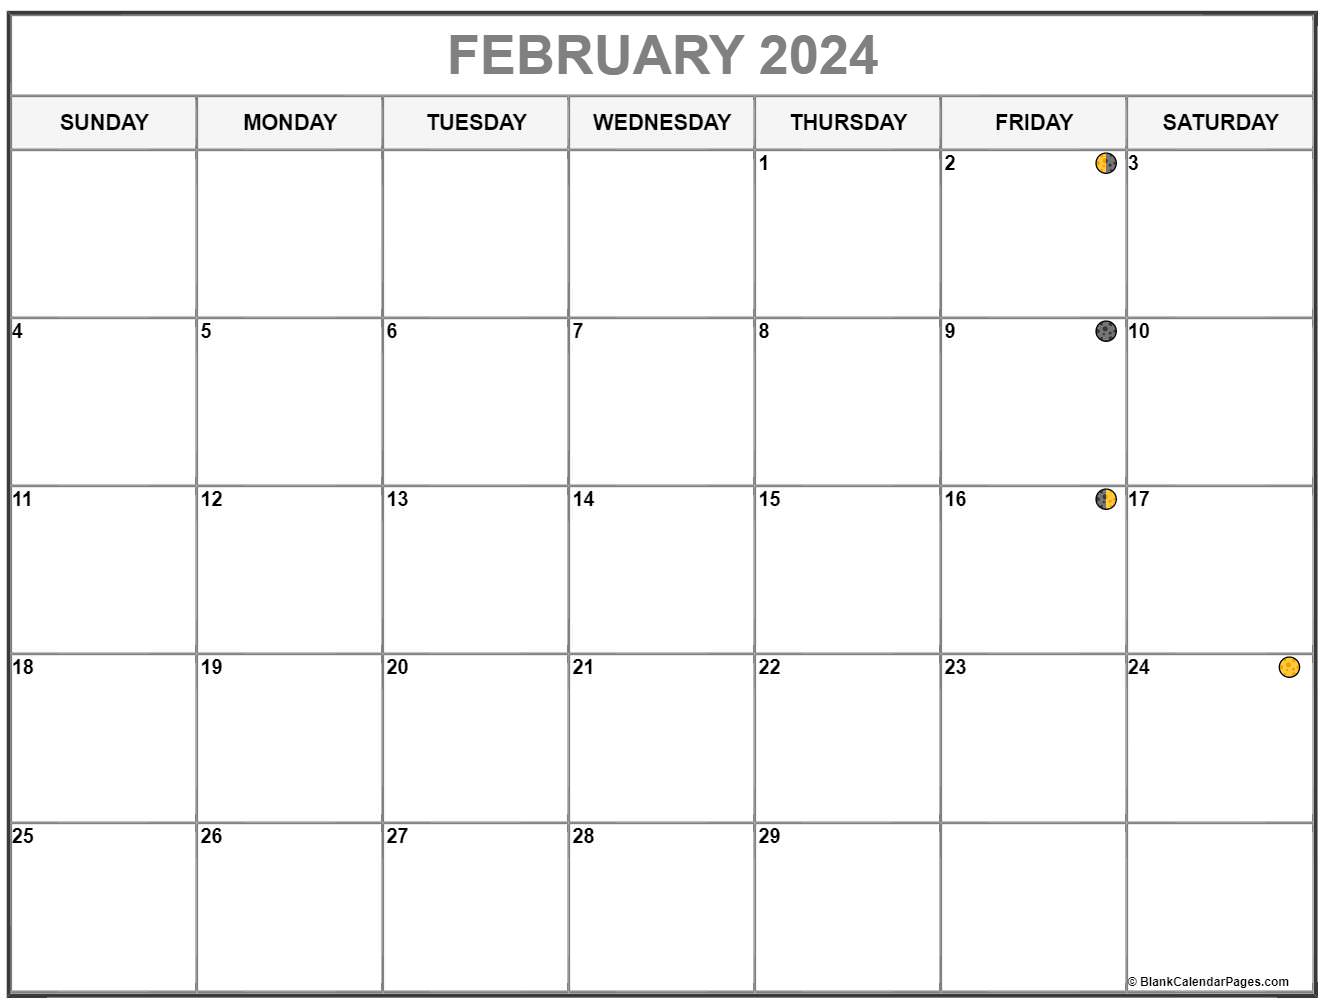 Full Moon Calendar October 2022 February 2022 Lunar Calendar | Moon Phase Calendar